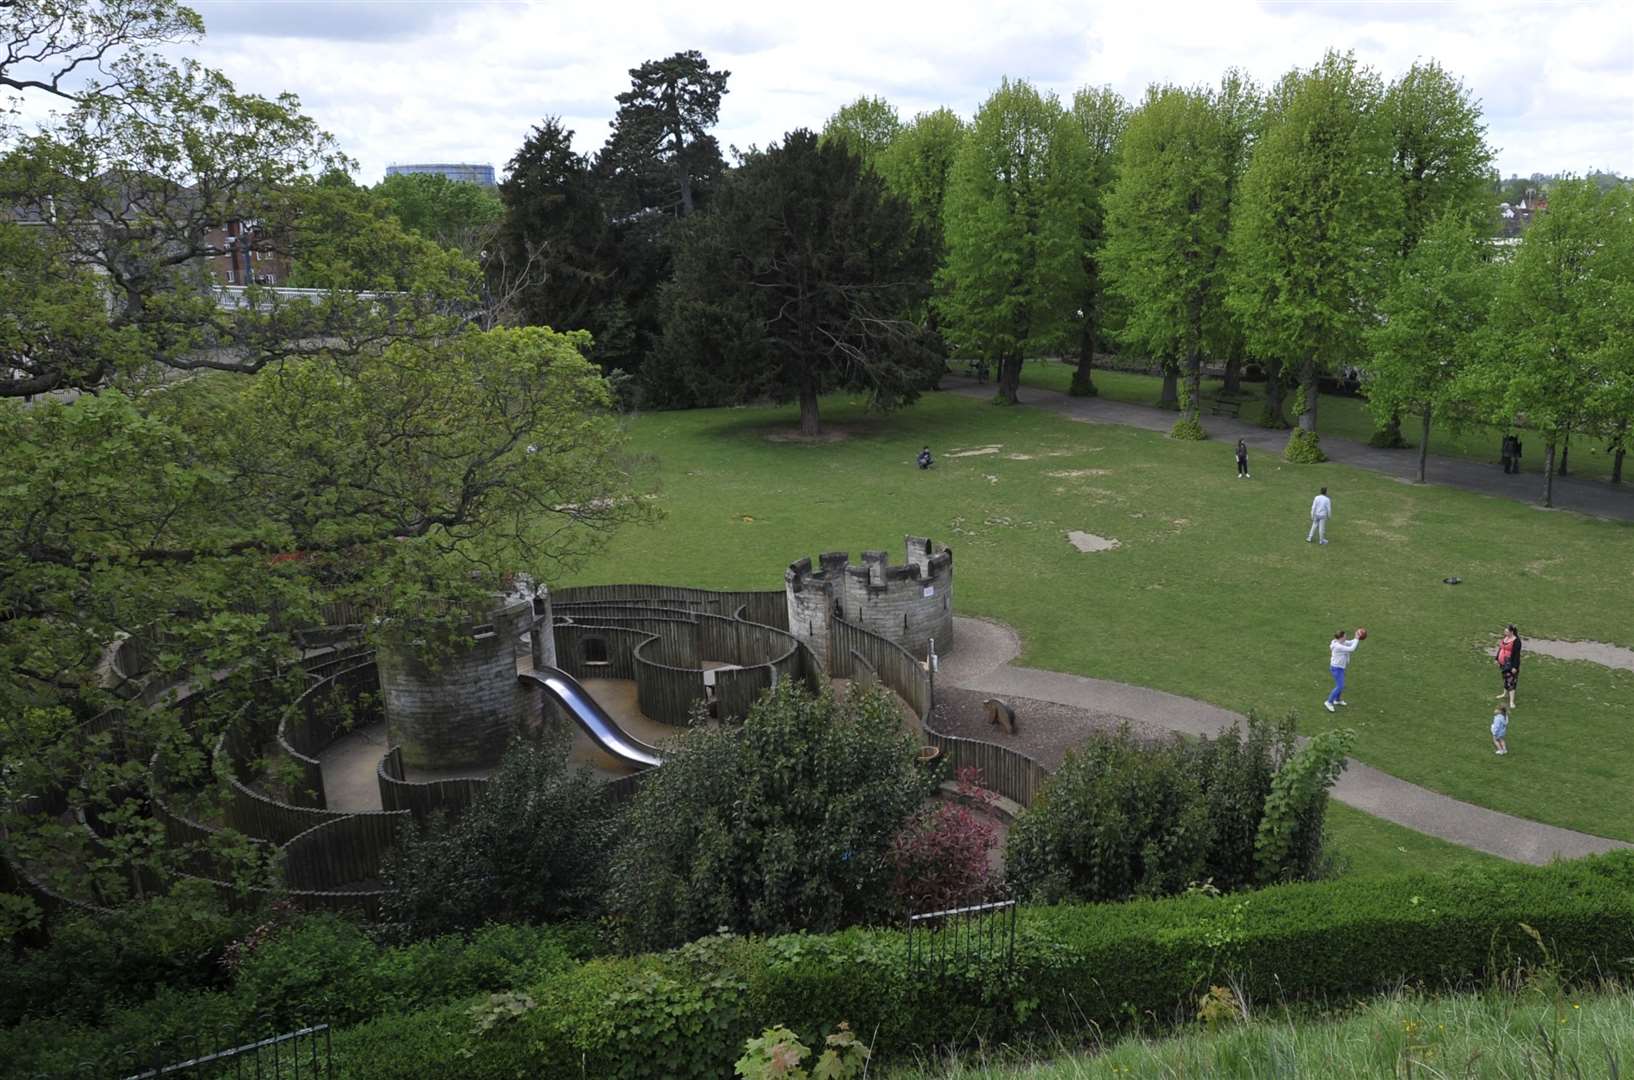 The long-standing maze in Dane John Gardens